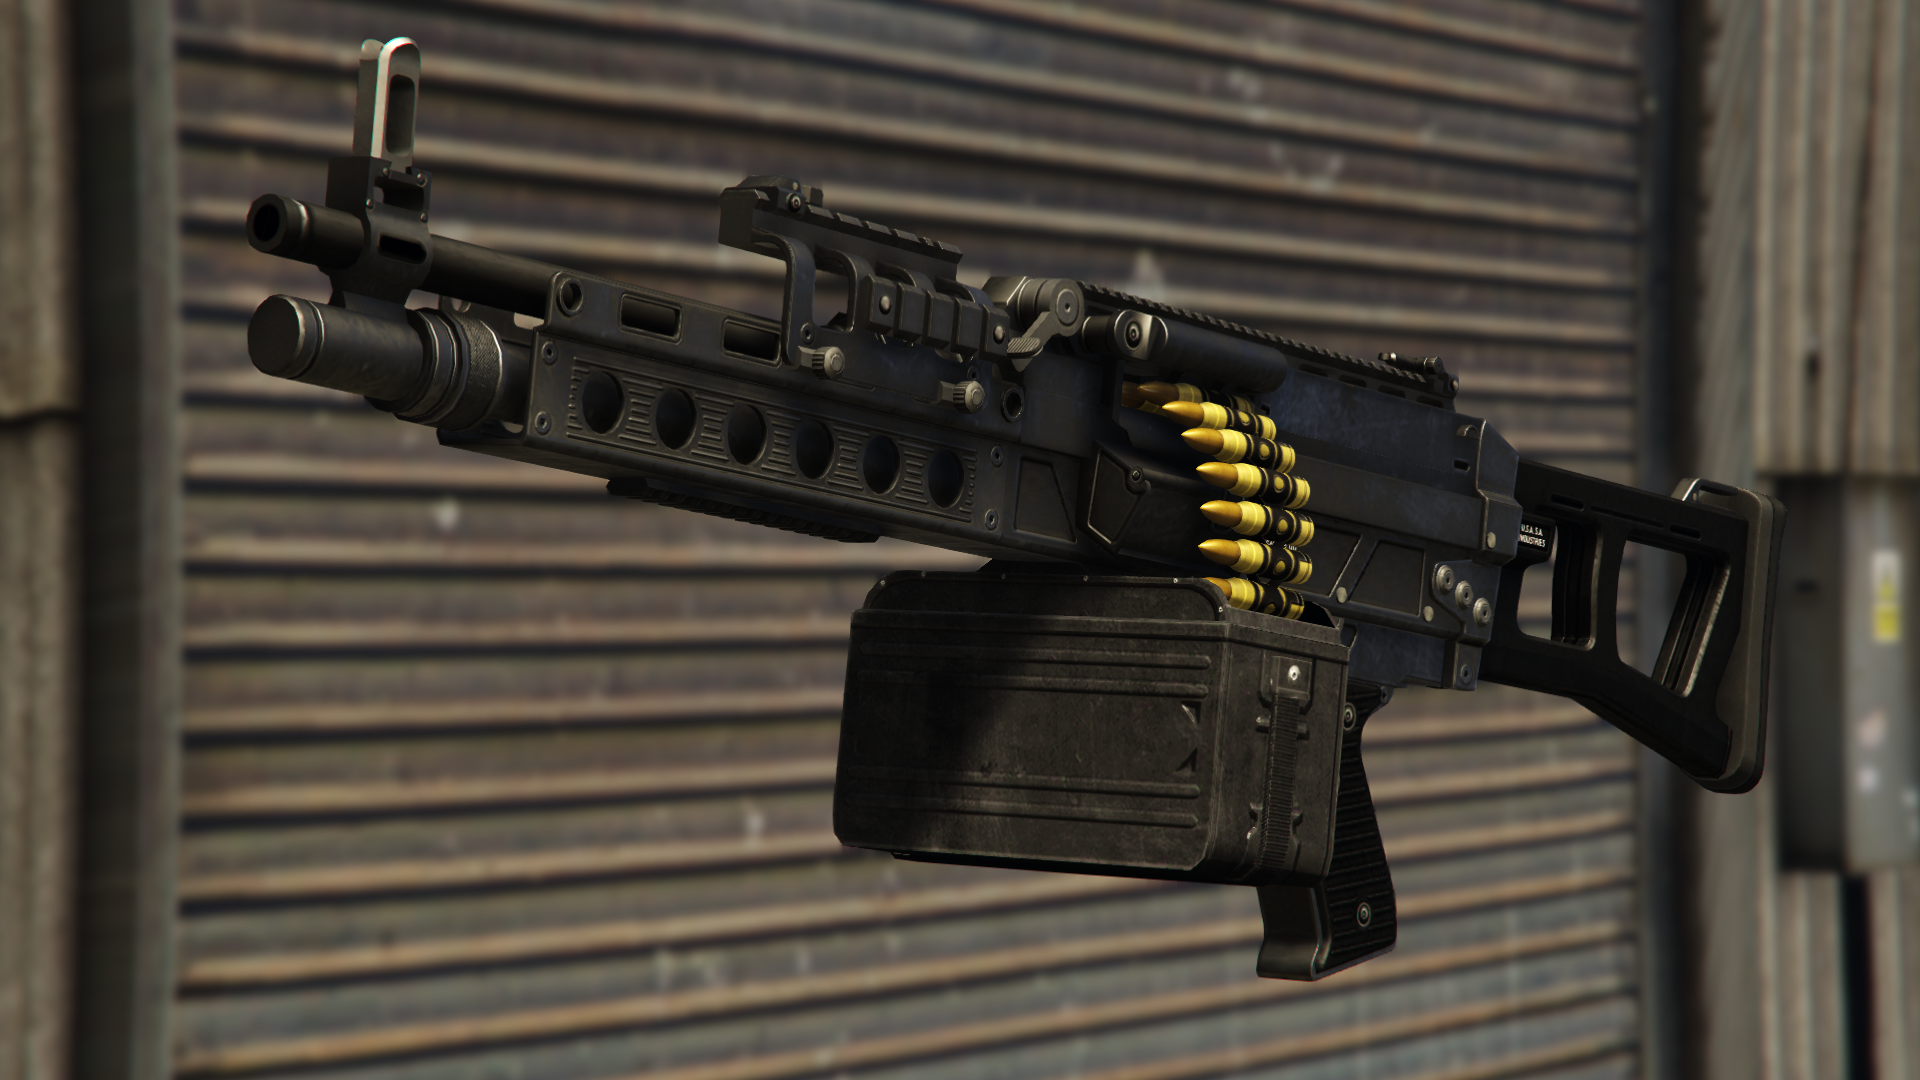 gta online gunrunning mk 2 weapons upgrade list